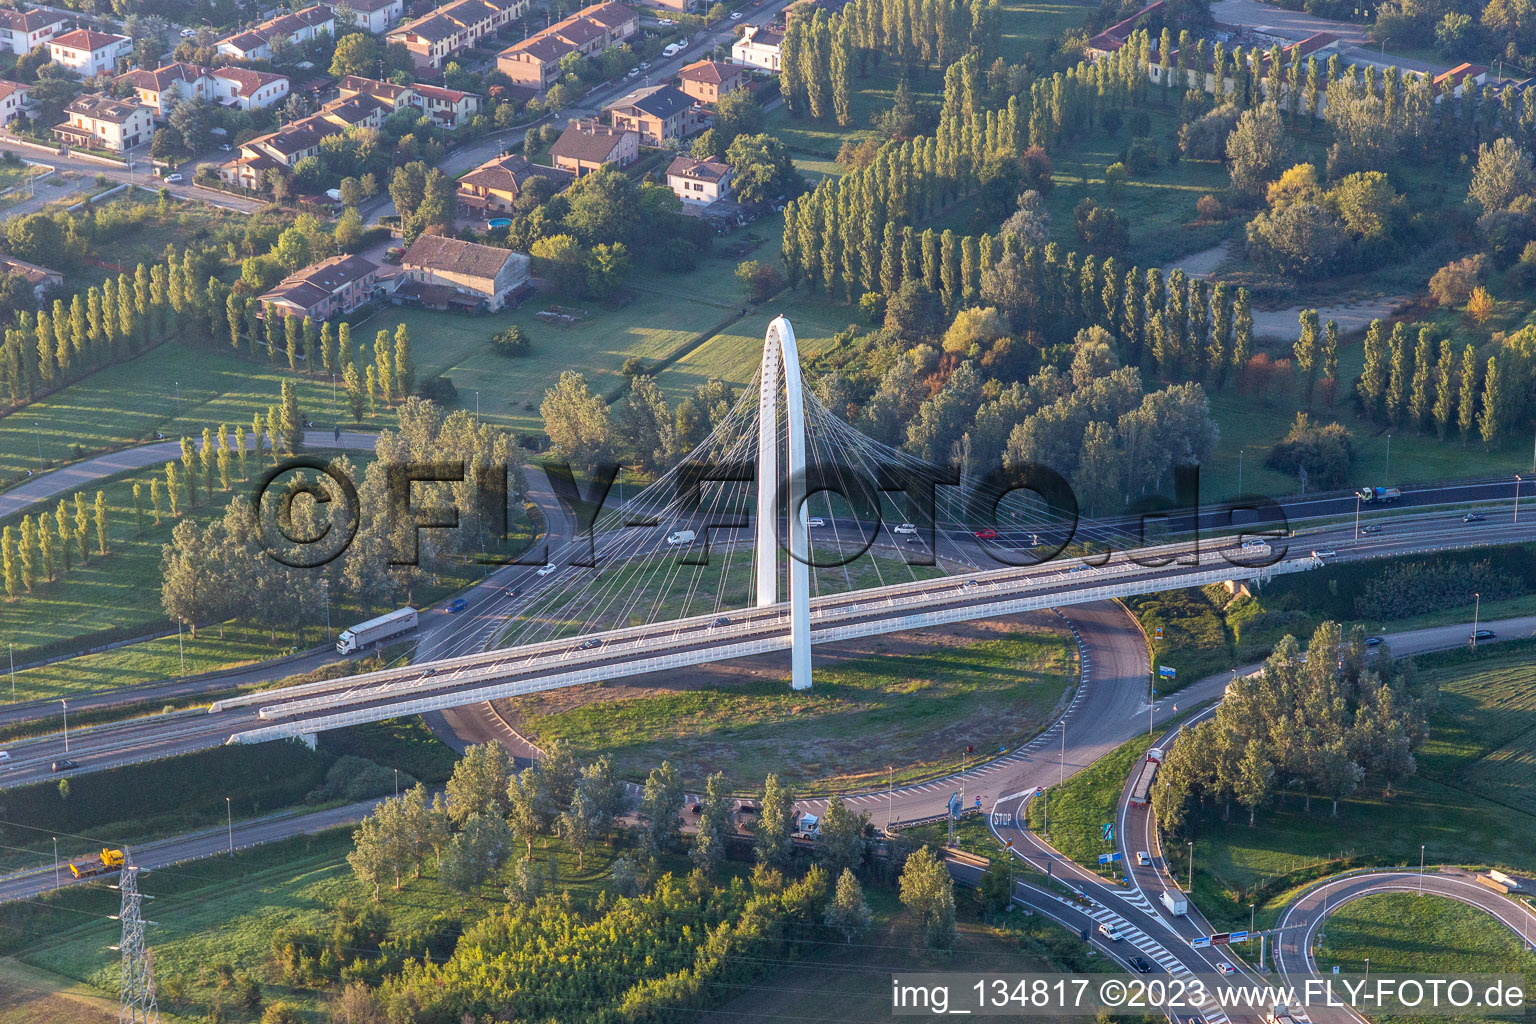 Luftbild von Brücke Vela di Calatrava SÜD in Reggio nell’Emilia im Bundesland Reggio Emilia, Italien